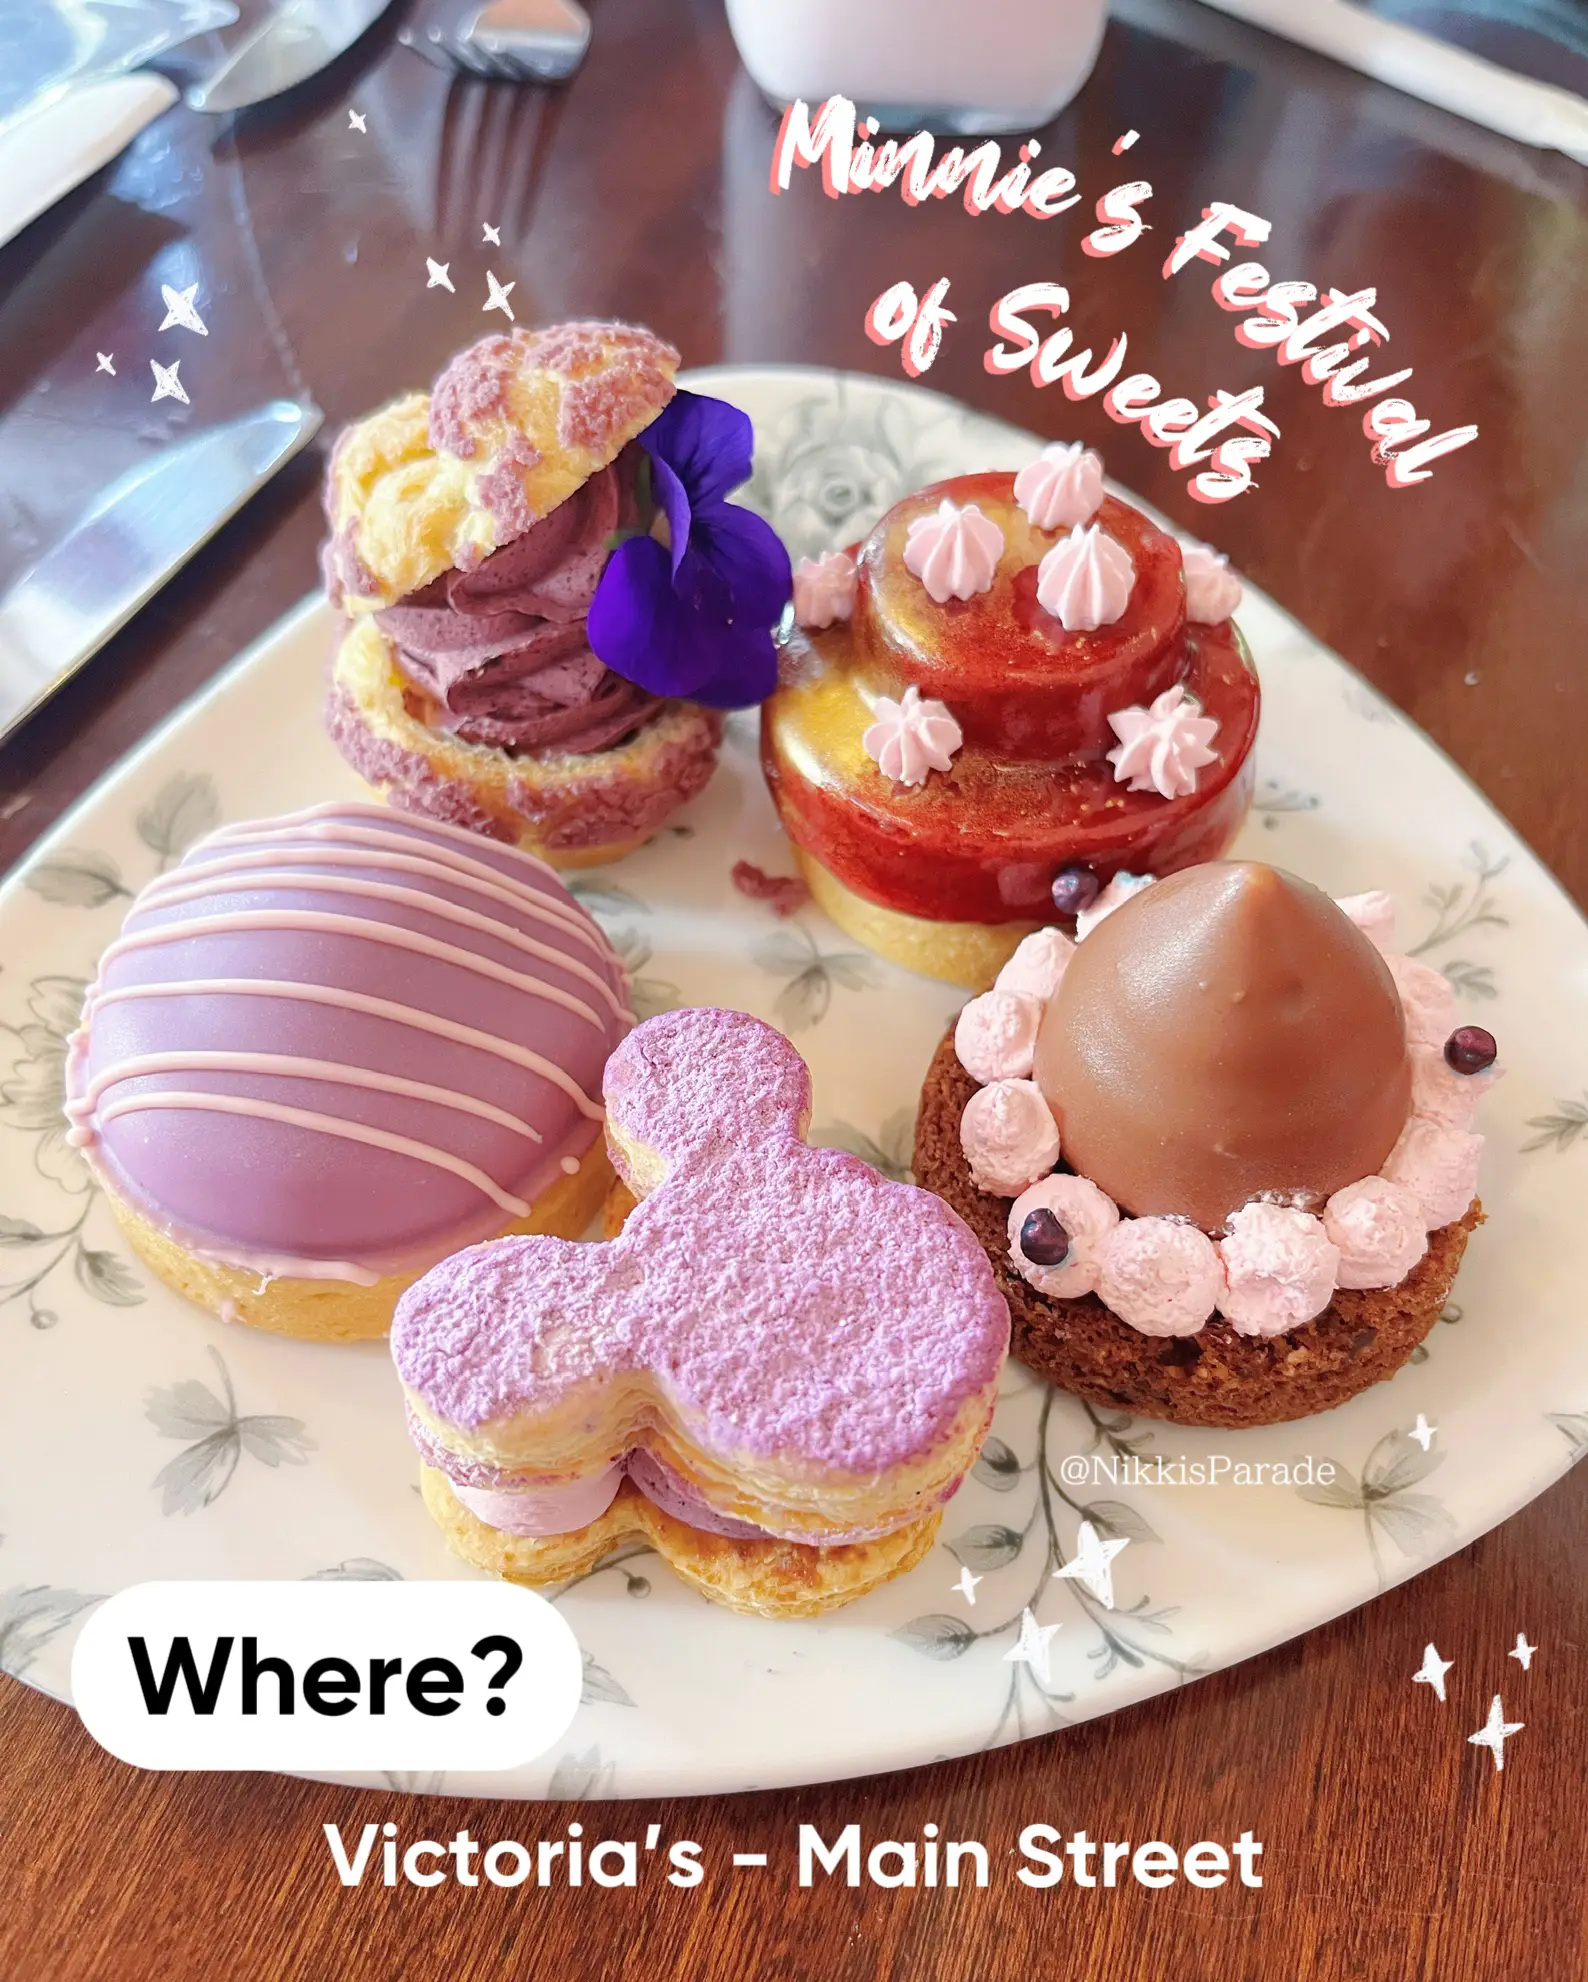 Sweet treats to try at Disneyland - Lemon8 Search